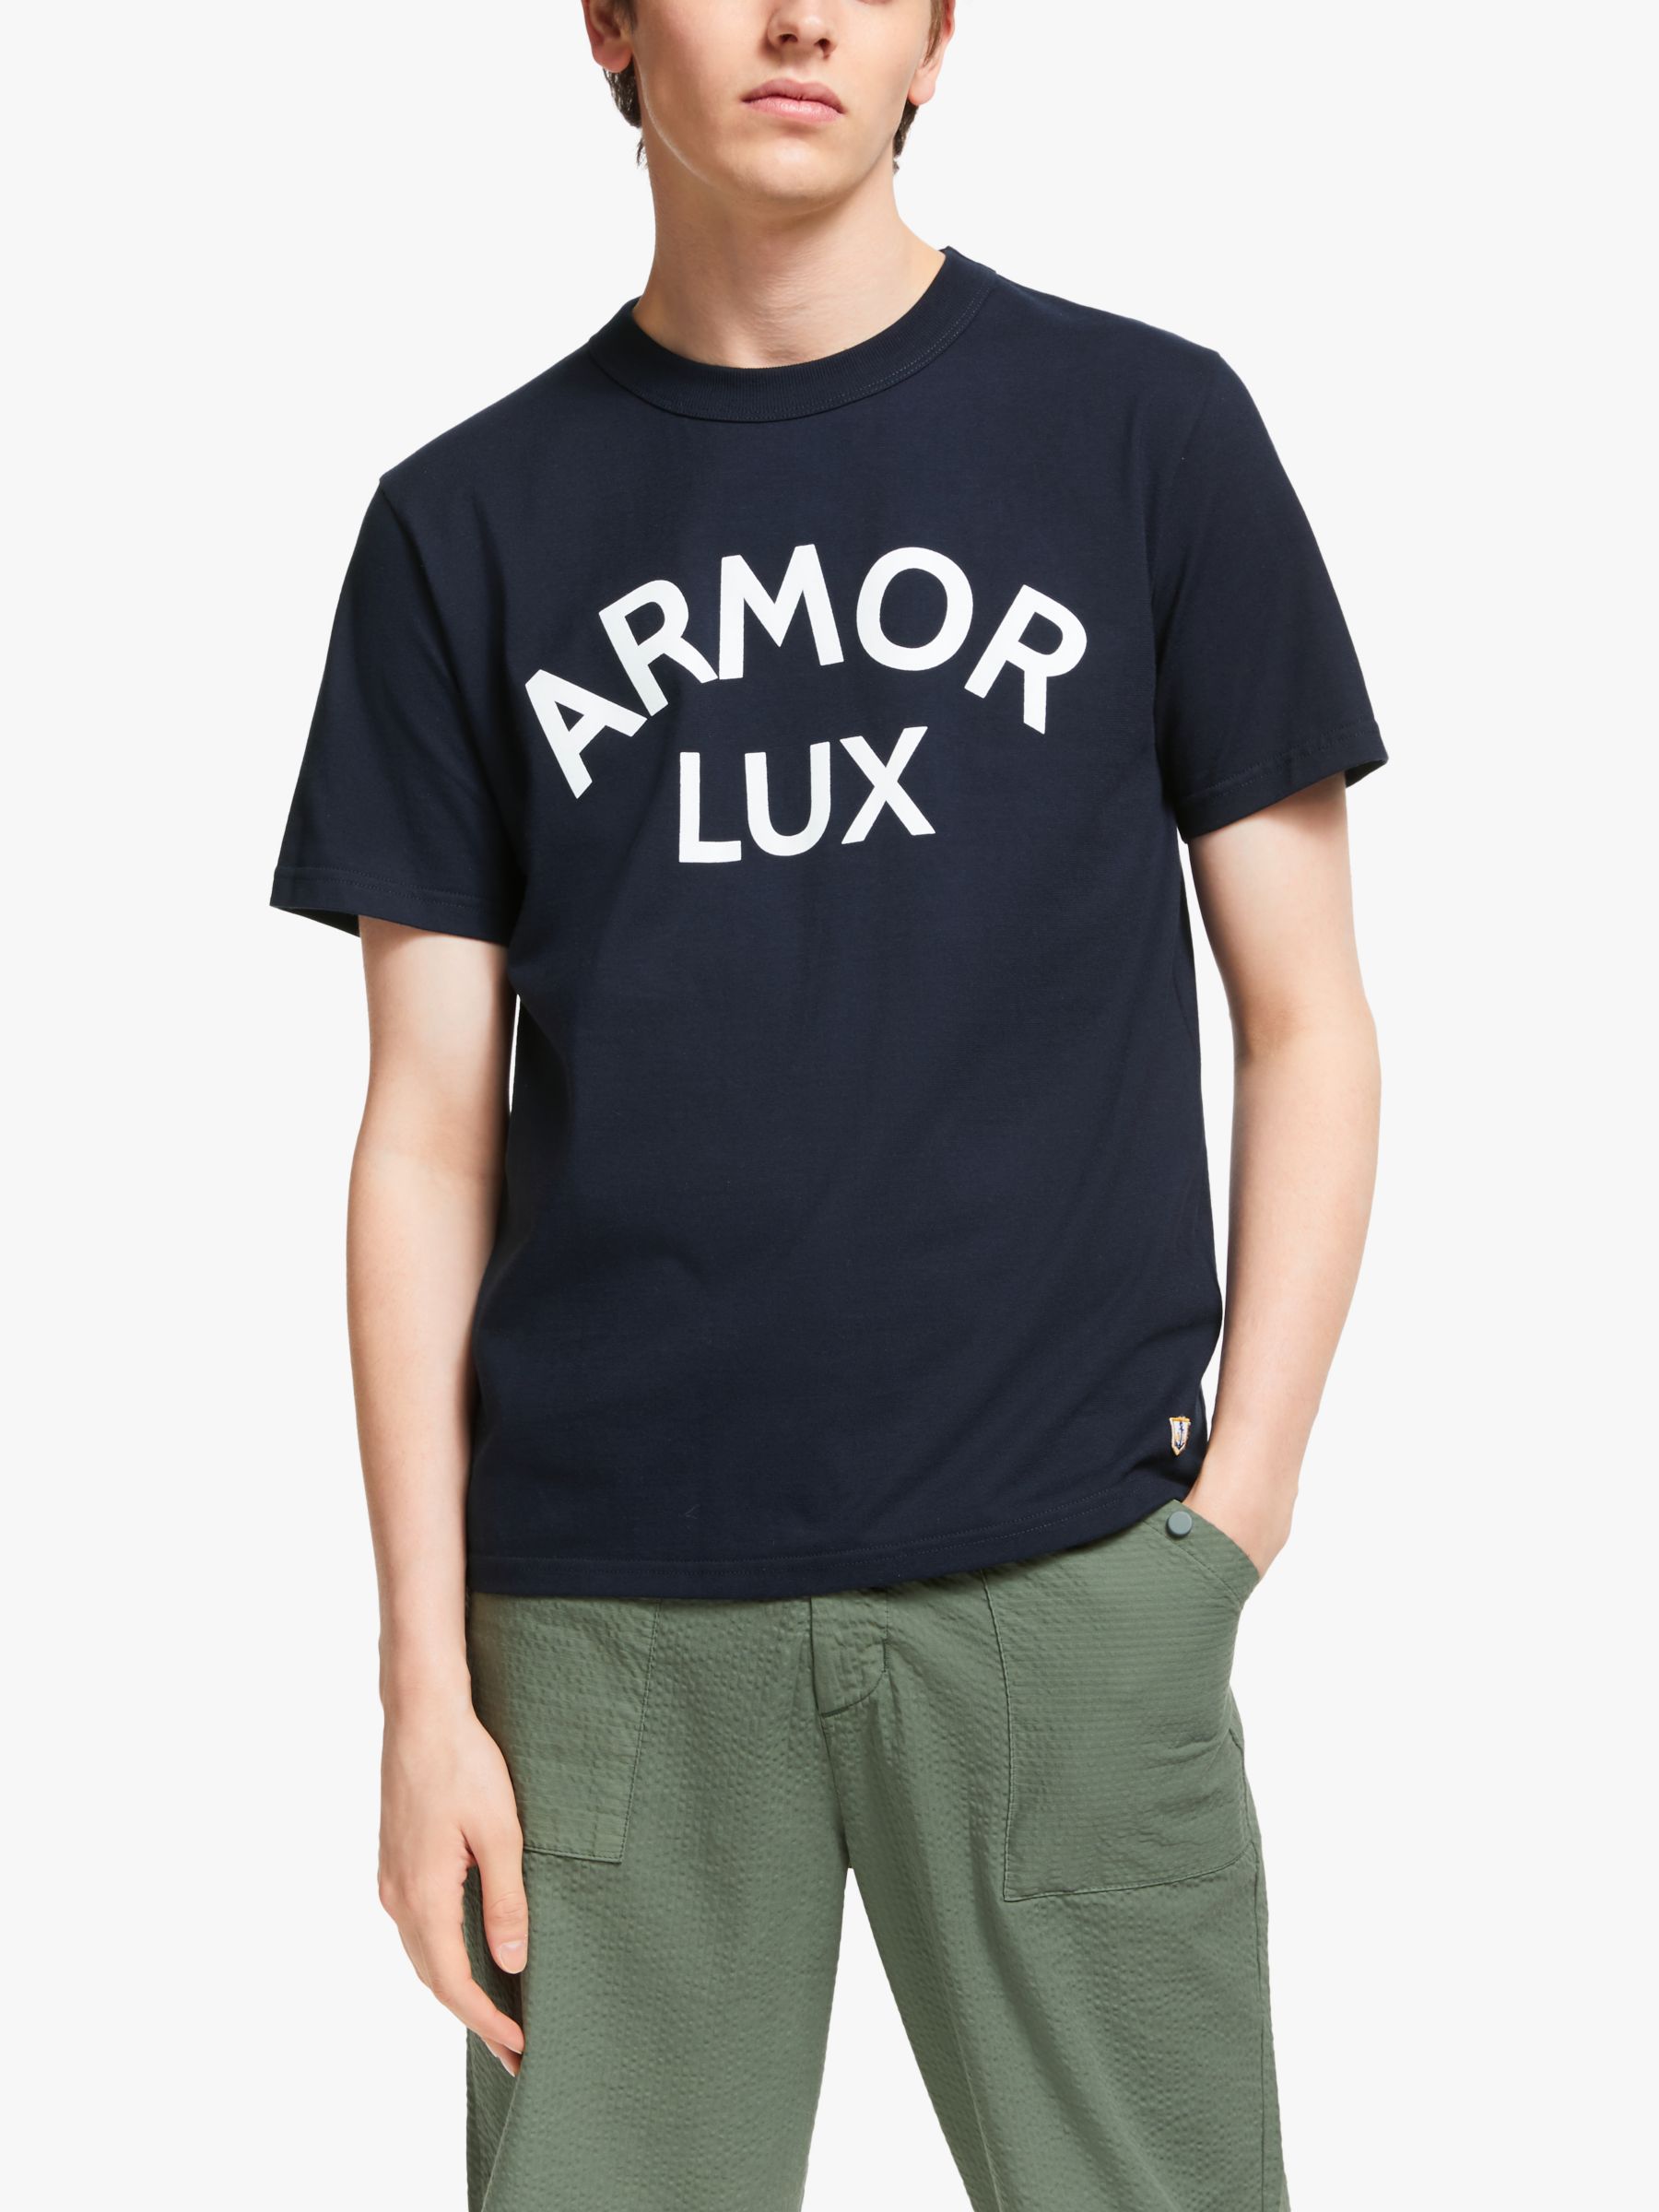 Armor Lux Short Sleeve Logo T-Shirt